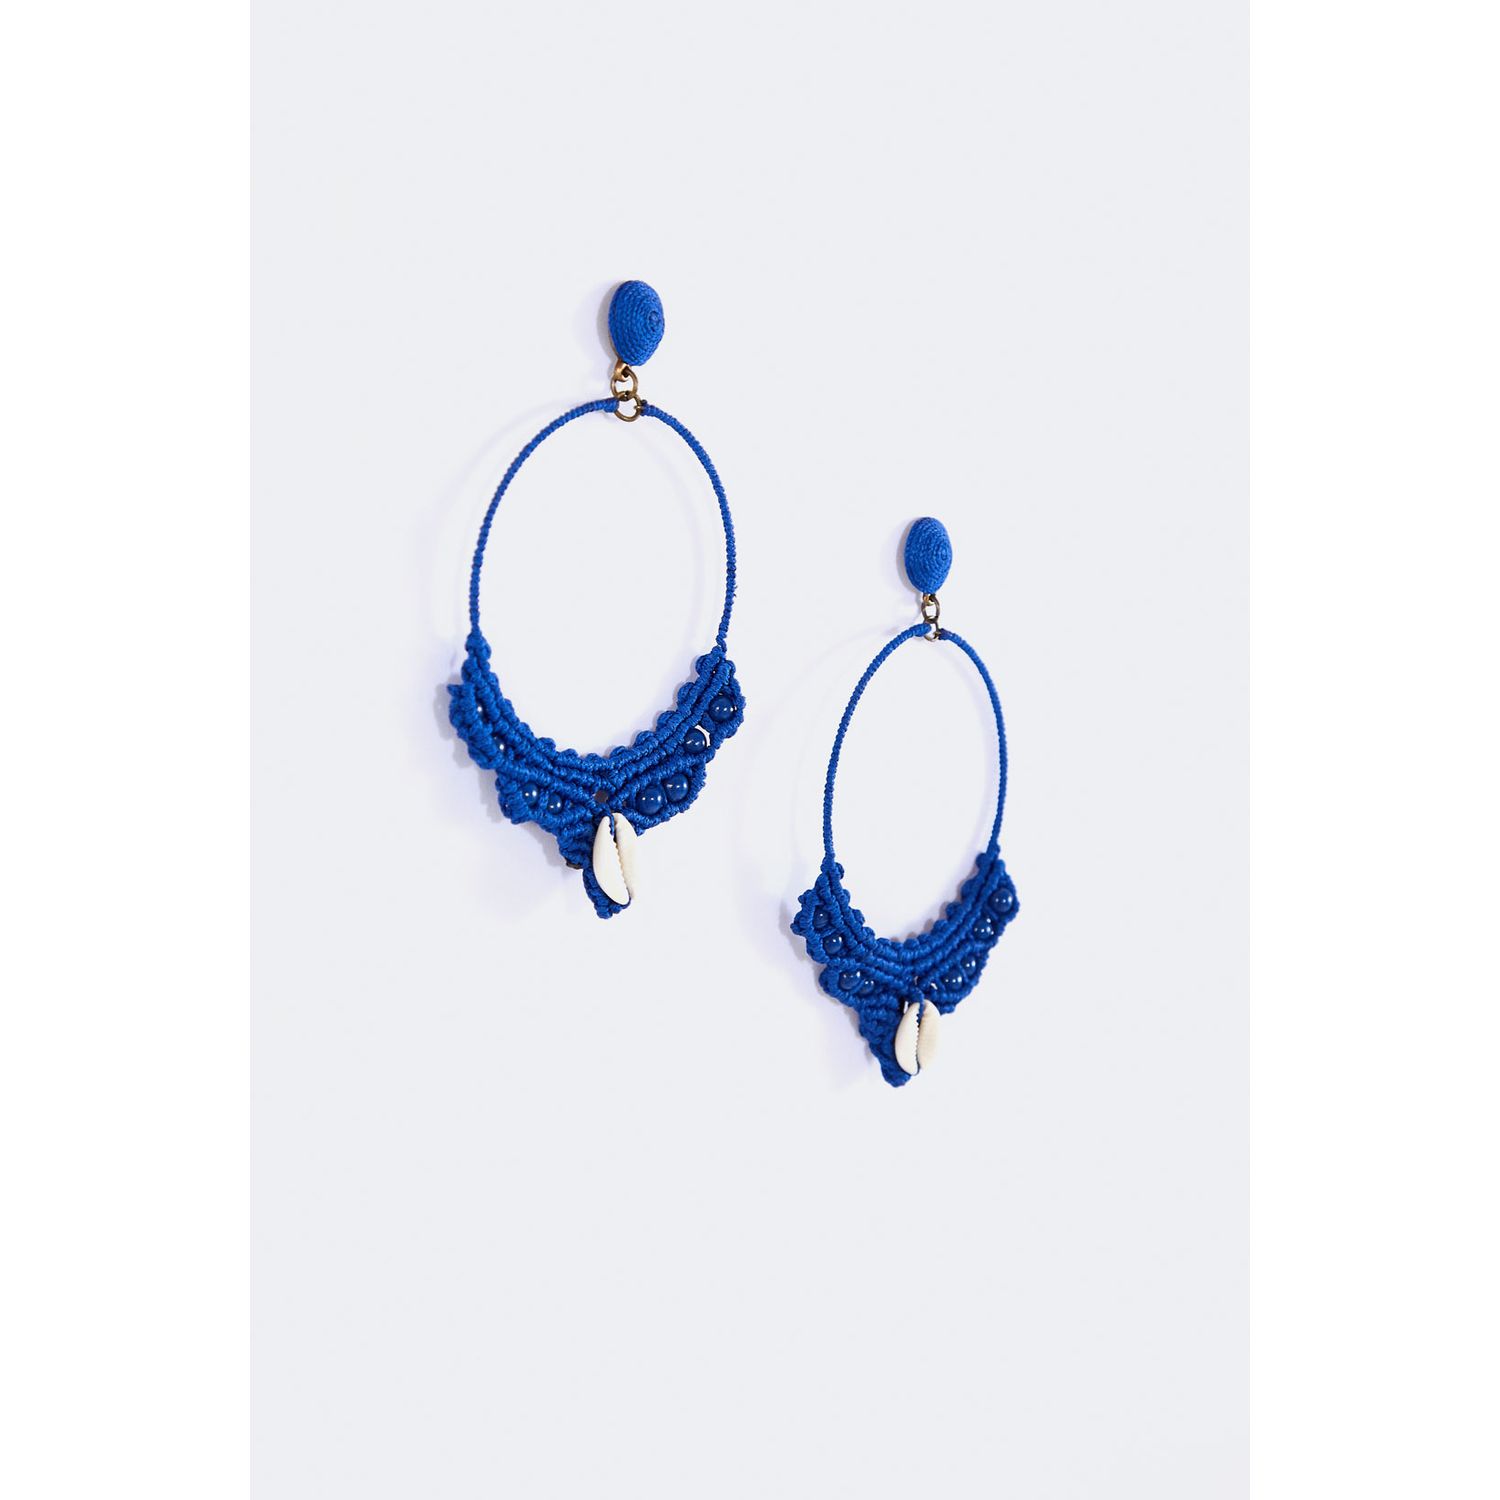 Brinco Argola Detalhe Crochet - Azul Deslumbrante - U - Farm Rio BR